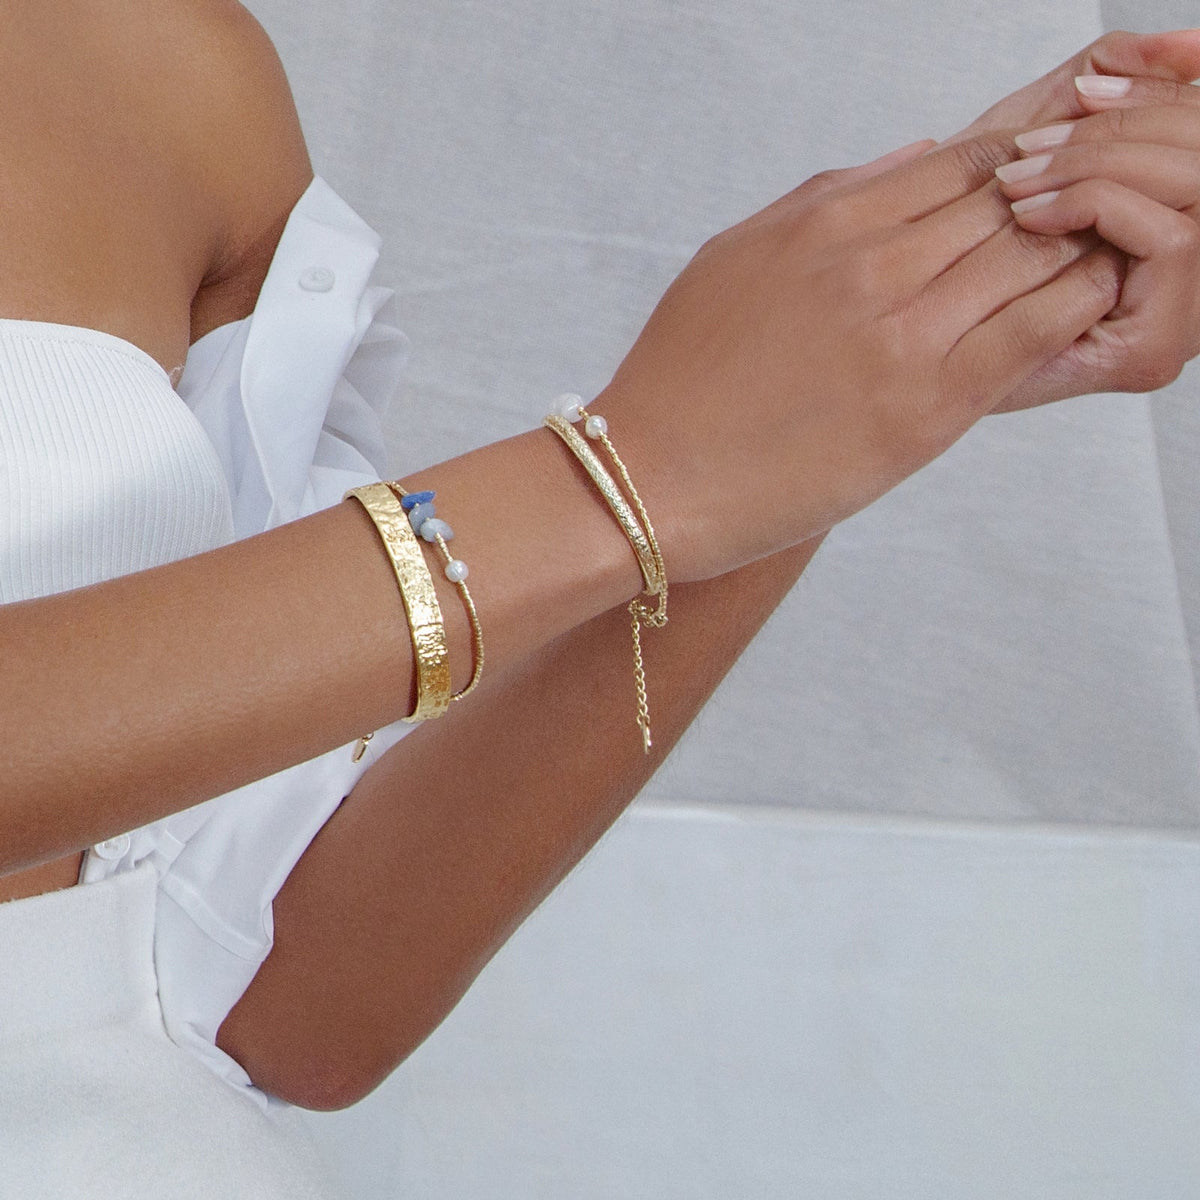 Arms of Eve Olivia Gold Cuff Bracelet